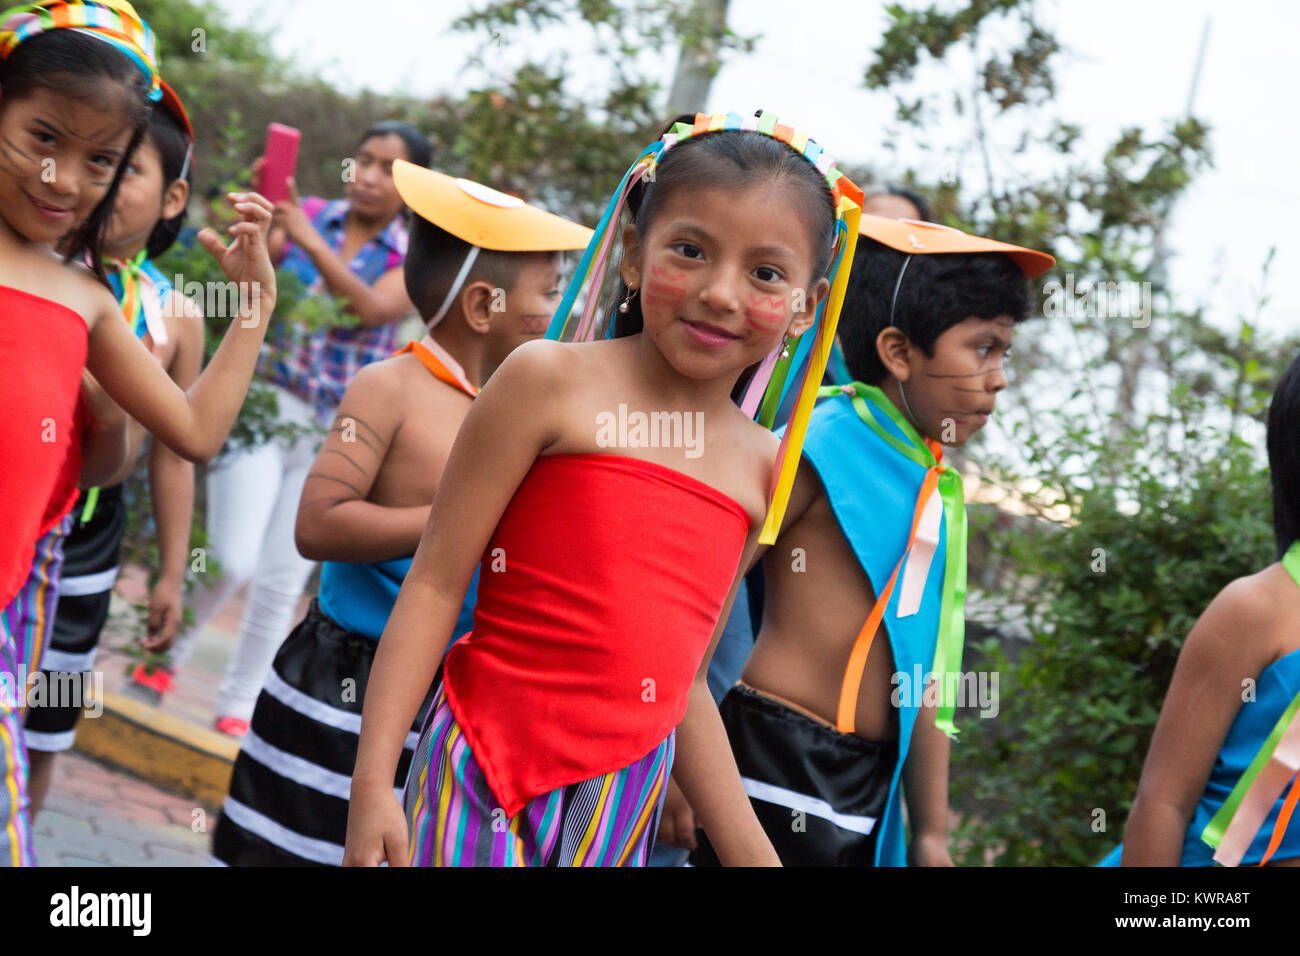 Straßenkind; Einheimische Galapagos-Kinder bei einer Straßenparade, Puerto Ayora, Santa Cruz, galapagos-Inseln, Ecuador Südamerika Stockfoto